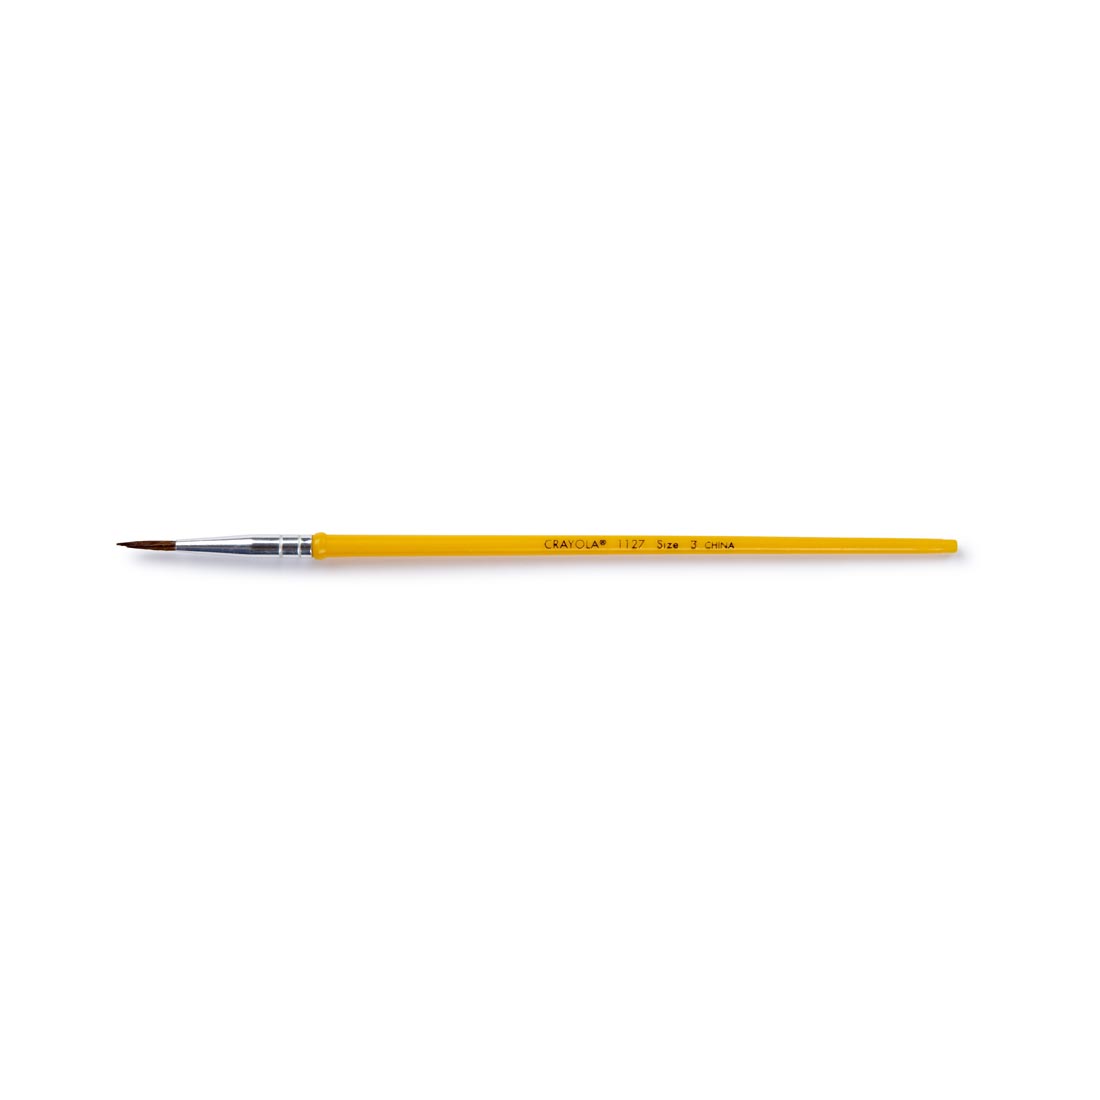 Crayola Round Watercolor Brush Size 3